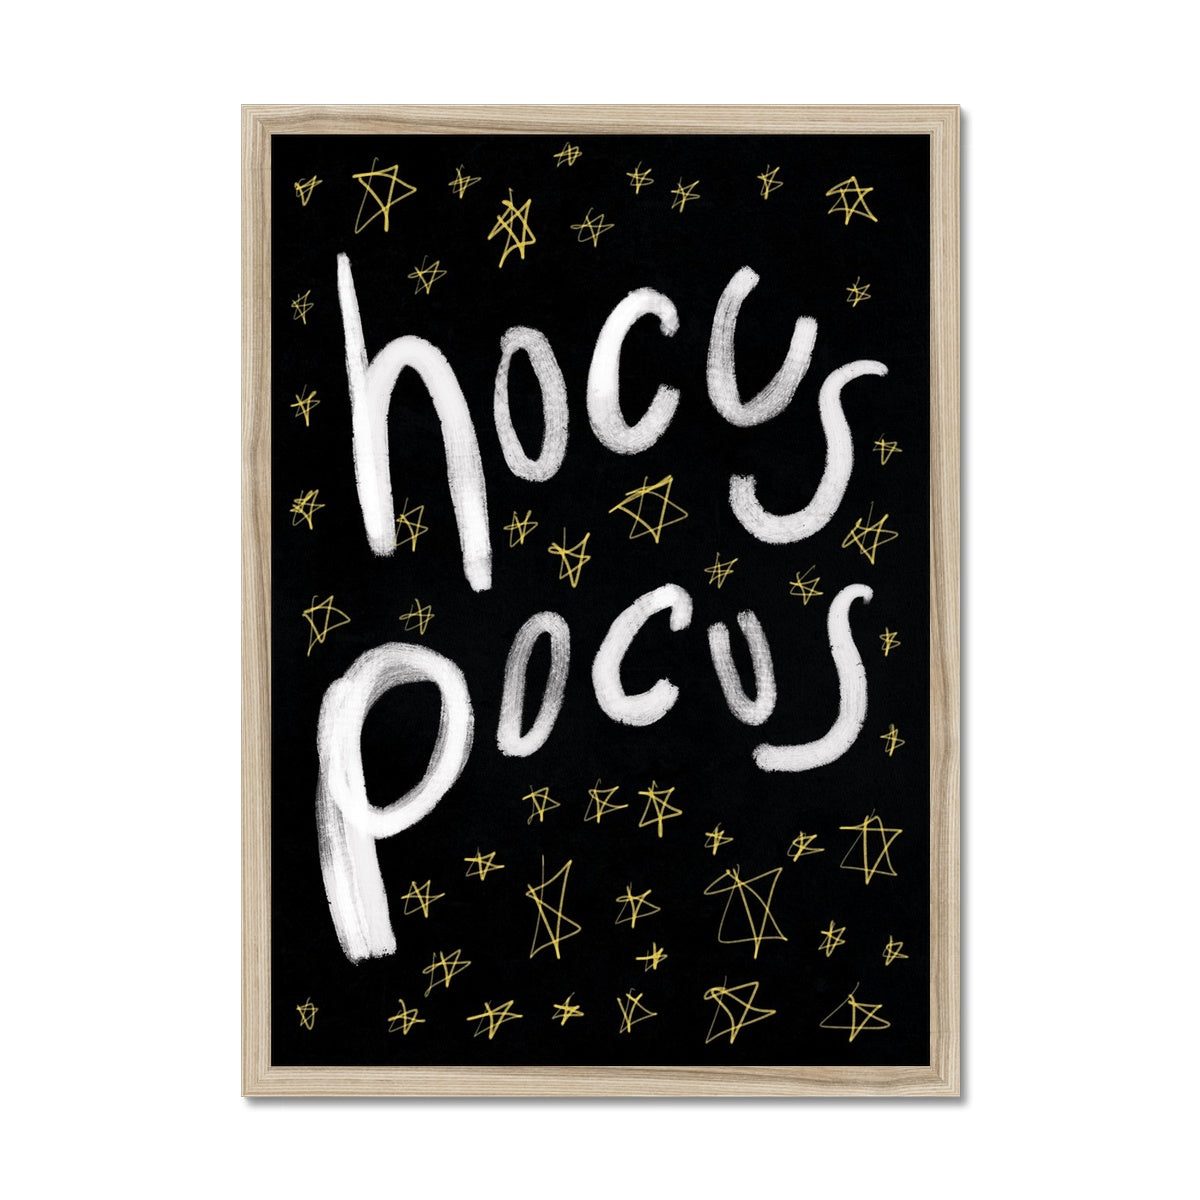 Hocus Pocus Print - Halloween Special Framed Print